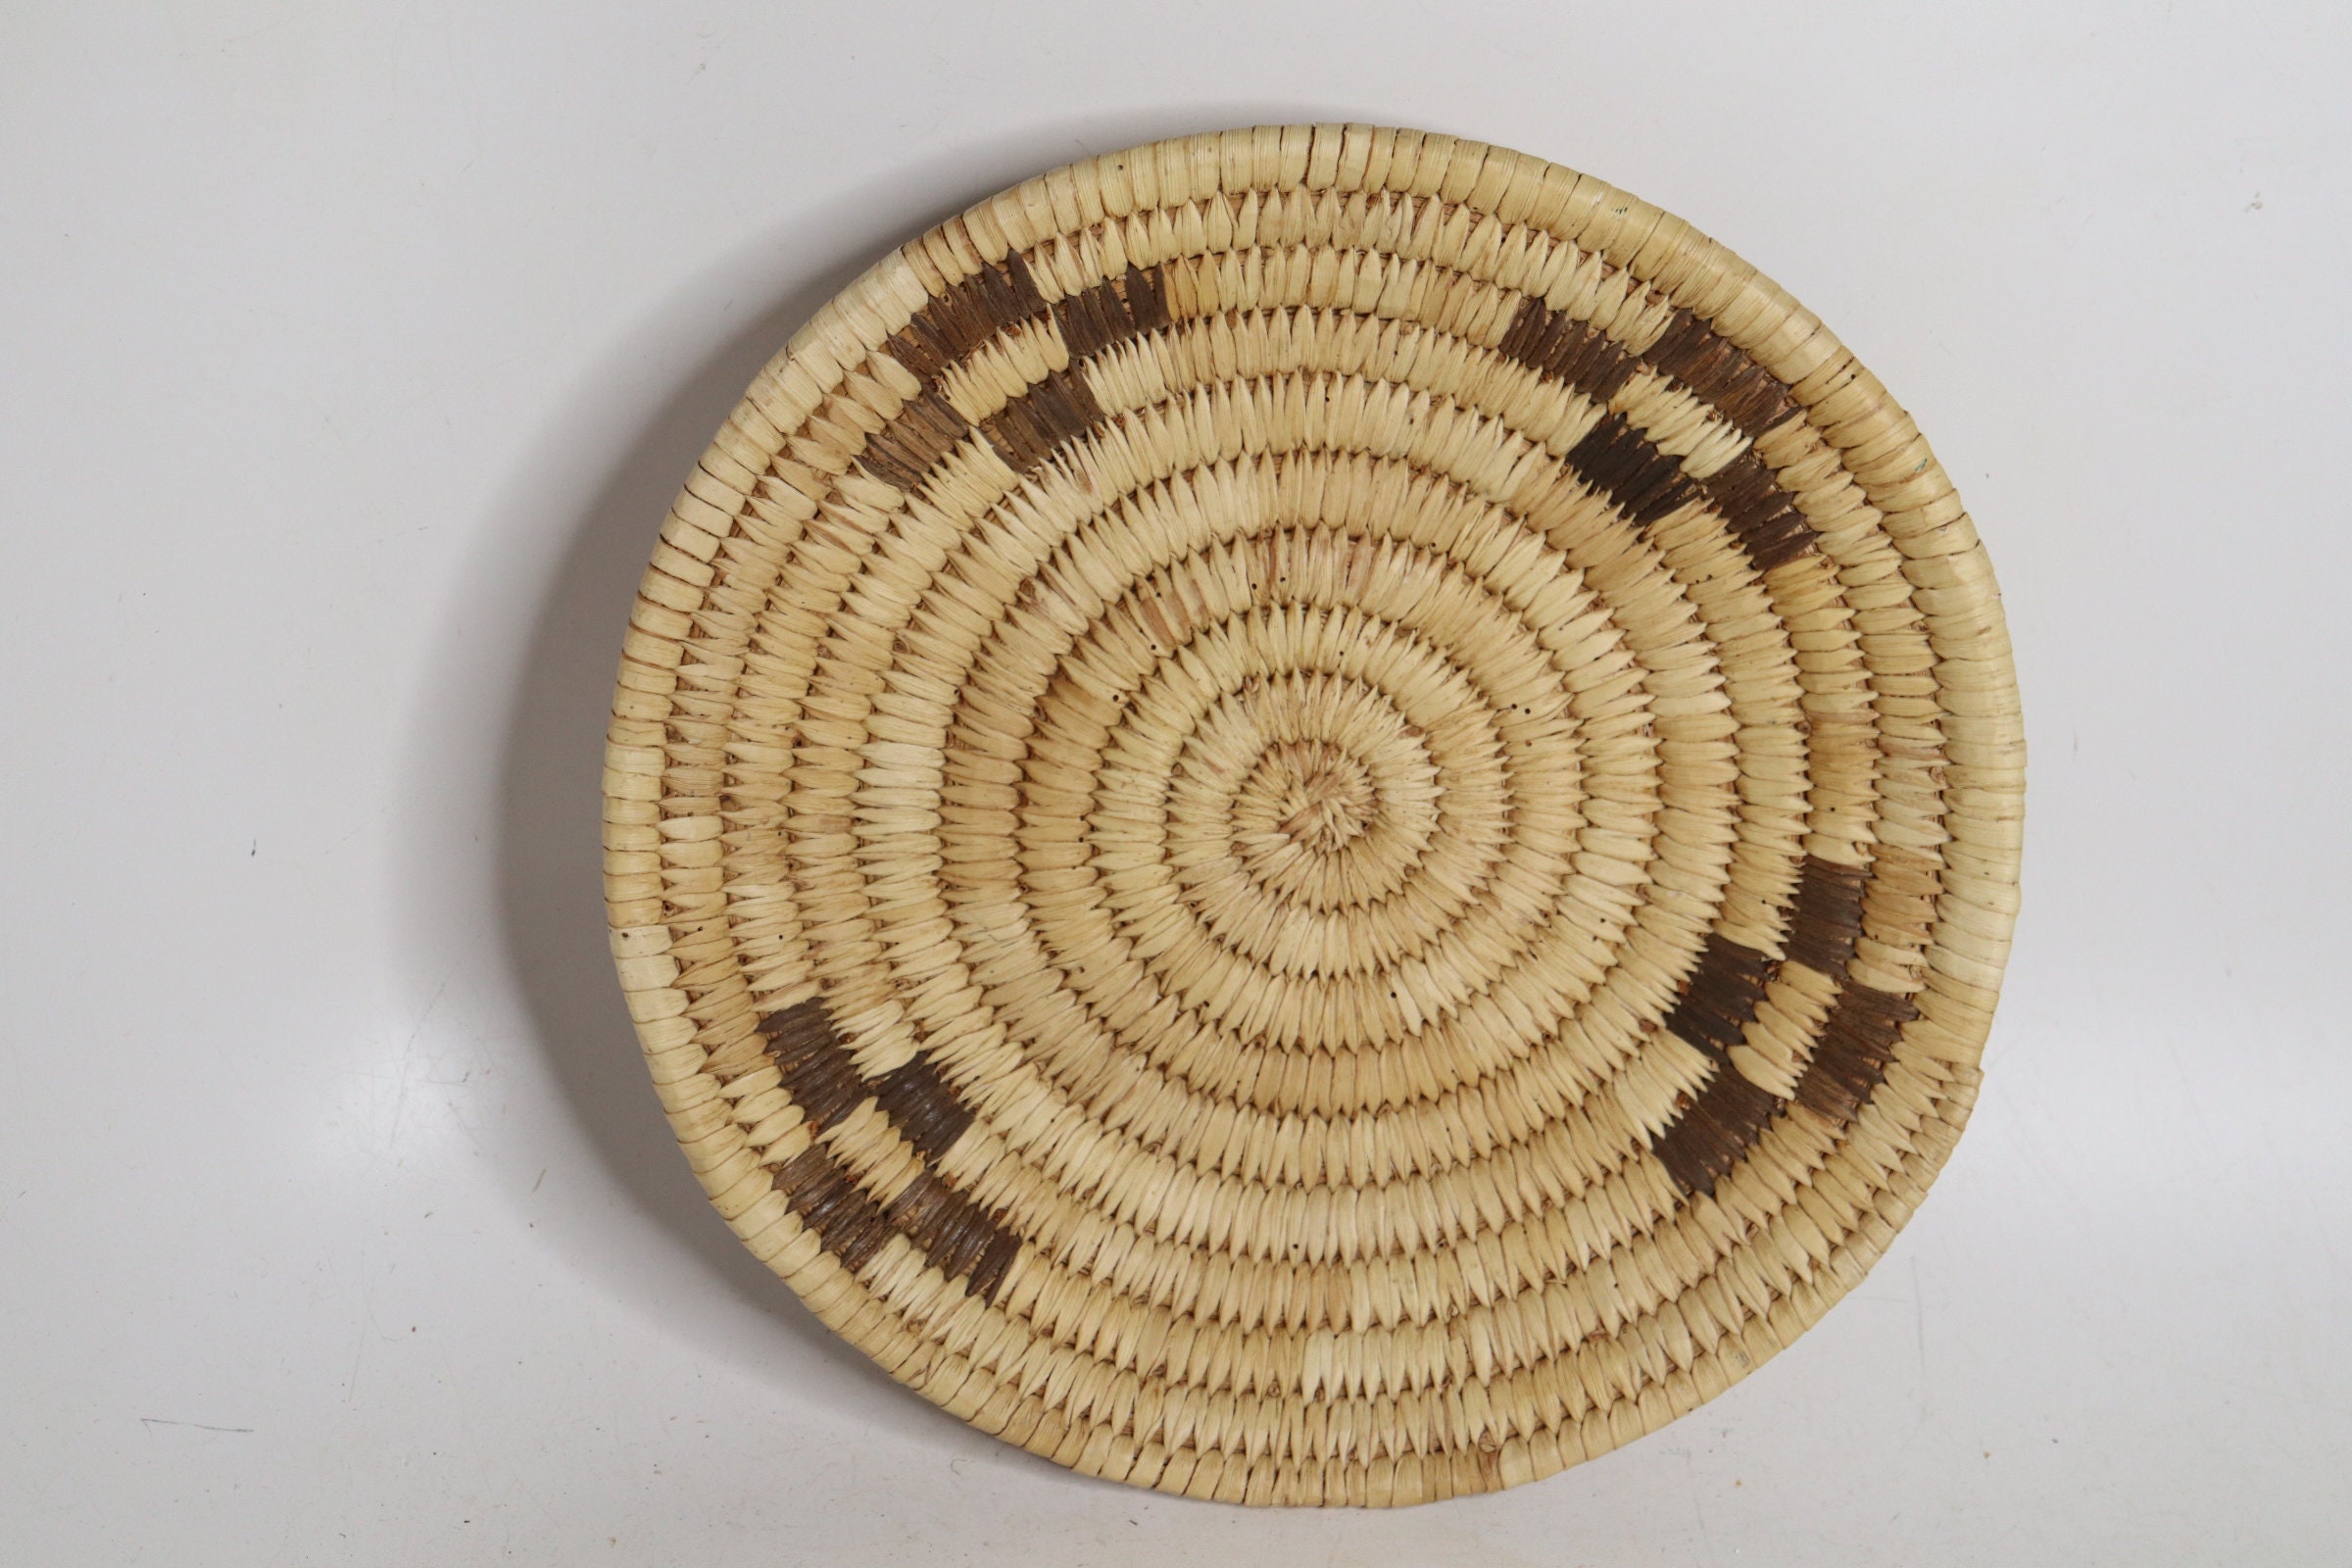 Small Native American Papago Tohono O'odham Two-Color Flat Basket